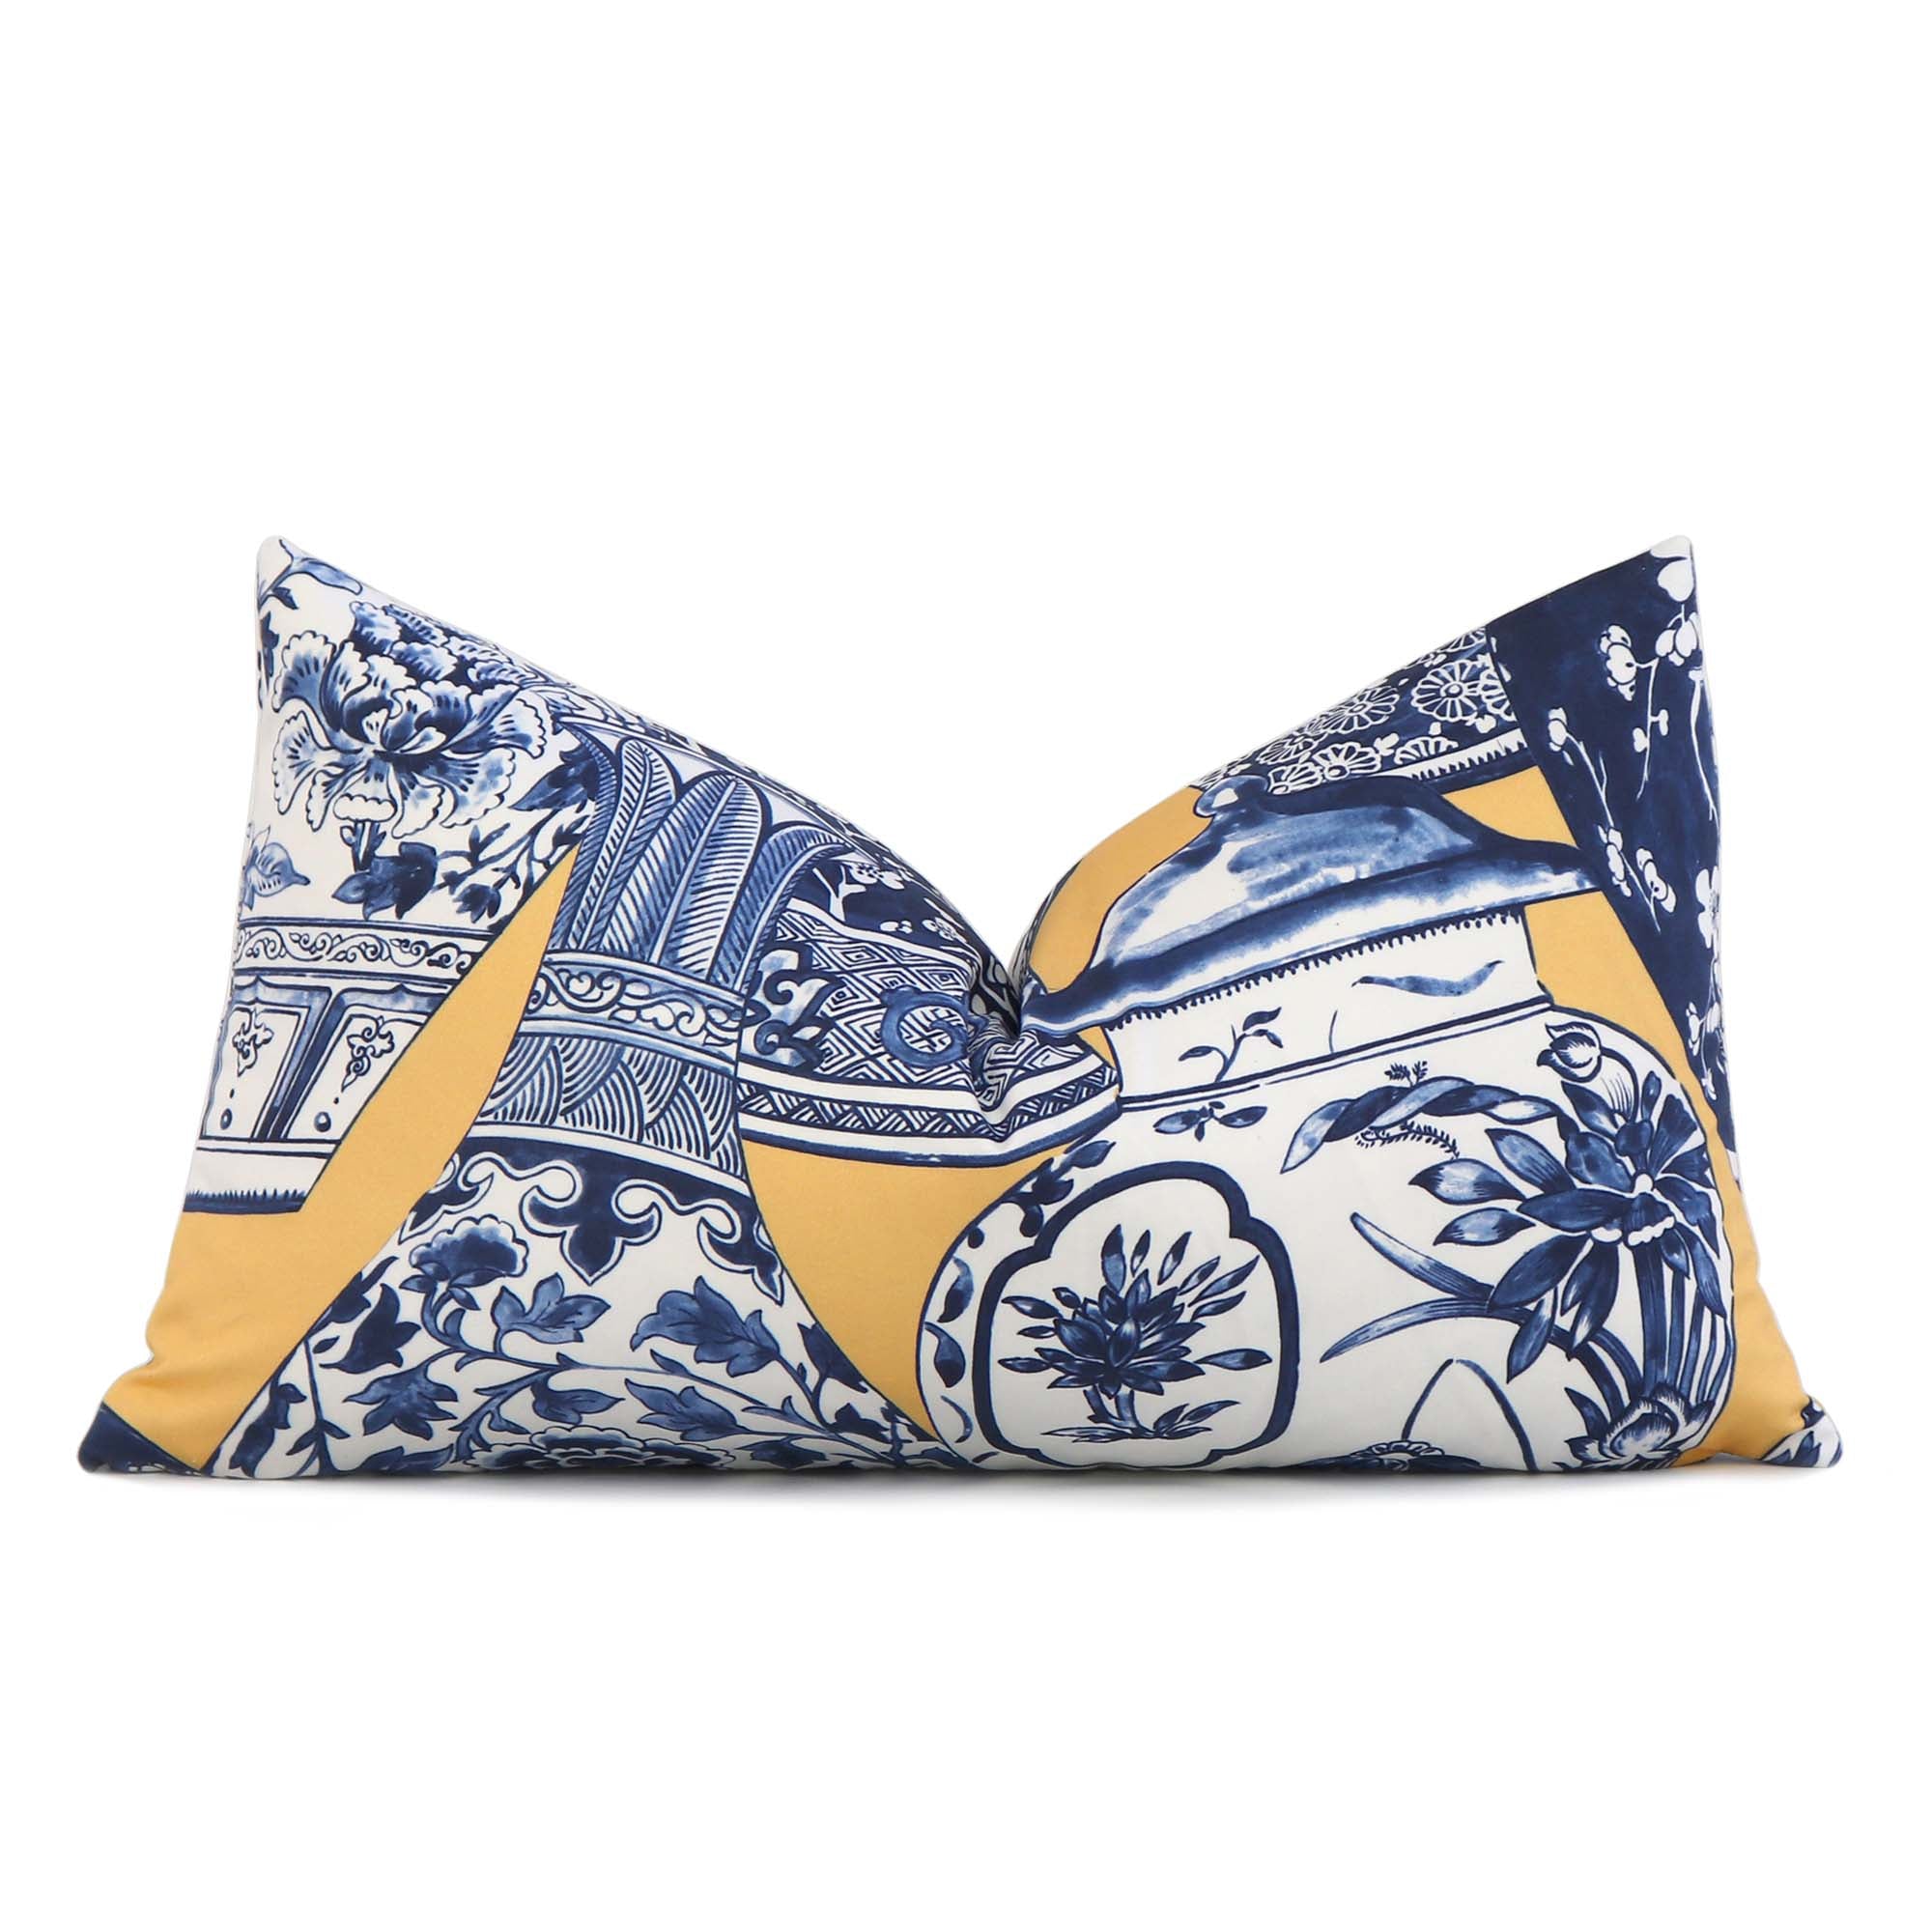 Lee Jofa Kravet Pandan Ming Vase Print Maize Yellow and Blue Designer Luxury Decorative Lumbar Throw Pillow Cover